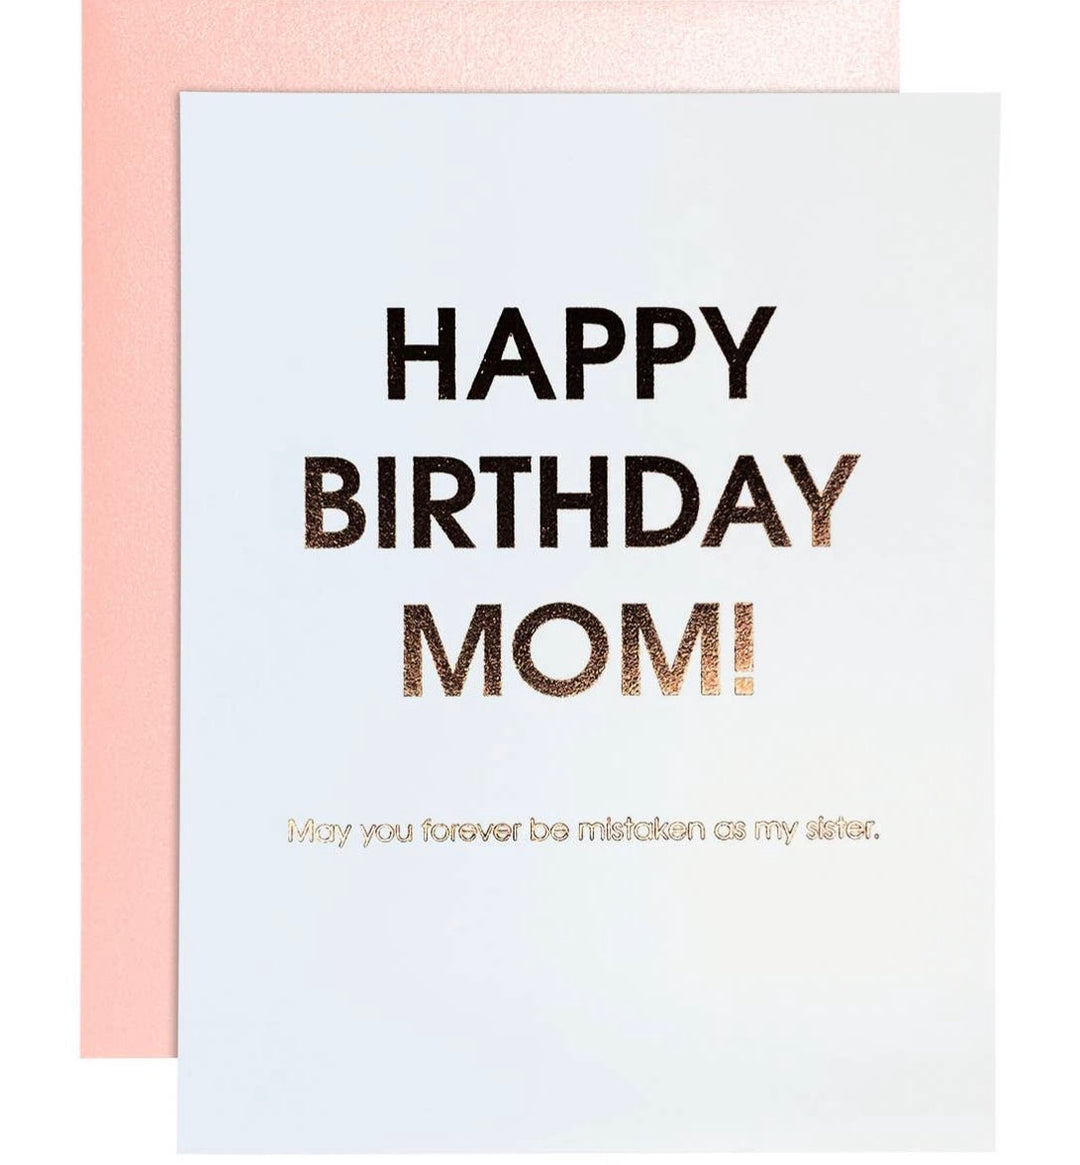 HAPPY BIRTHDAY MOM CARD